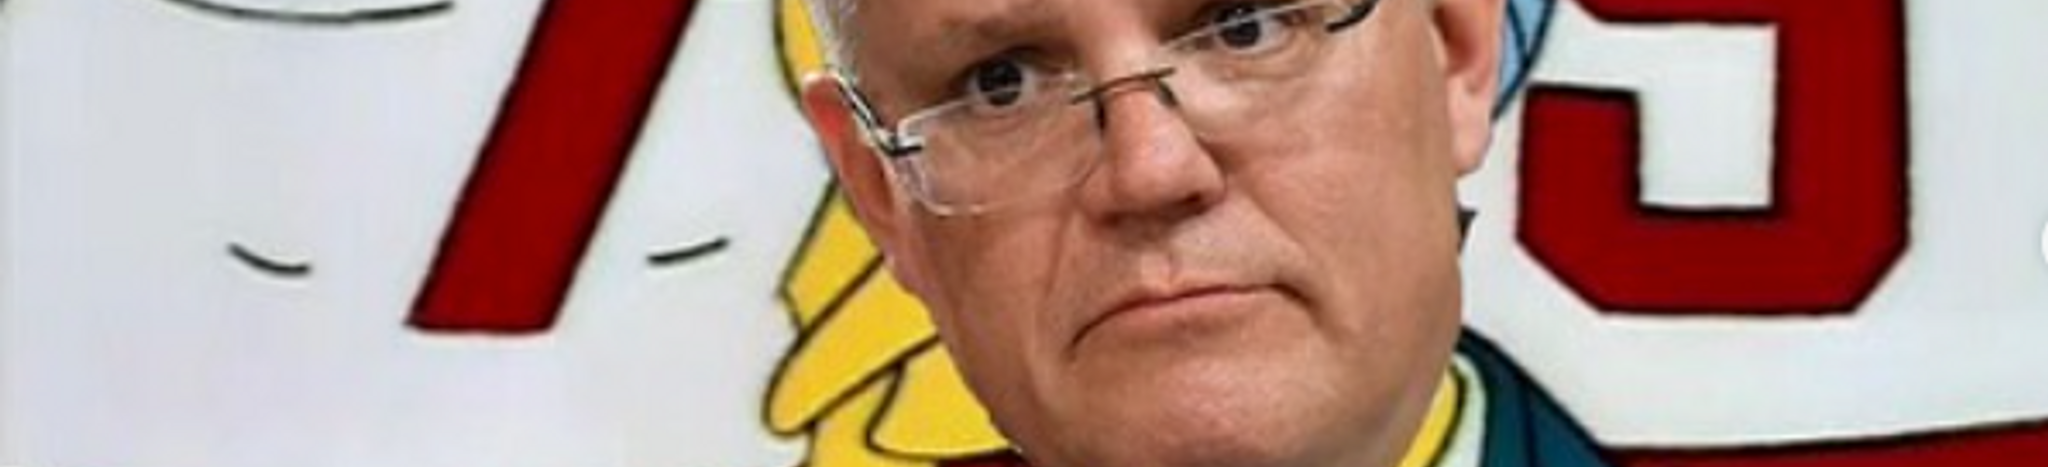 Simpsons memes contextualise politics for young Aussies